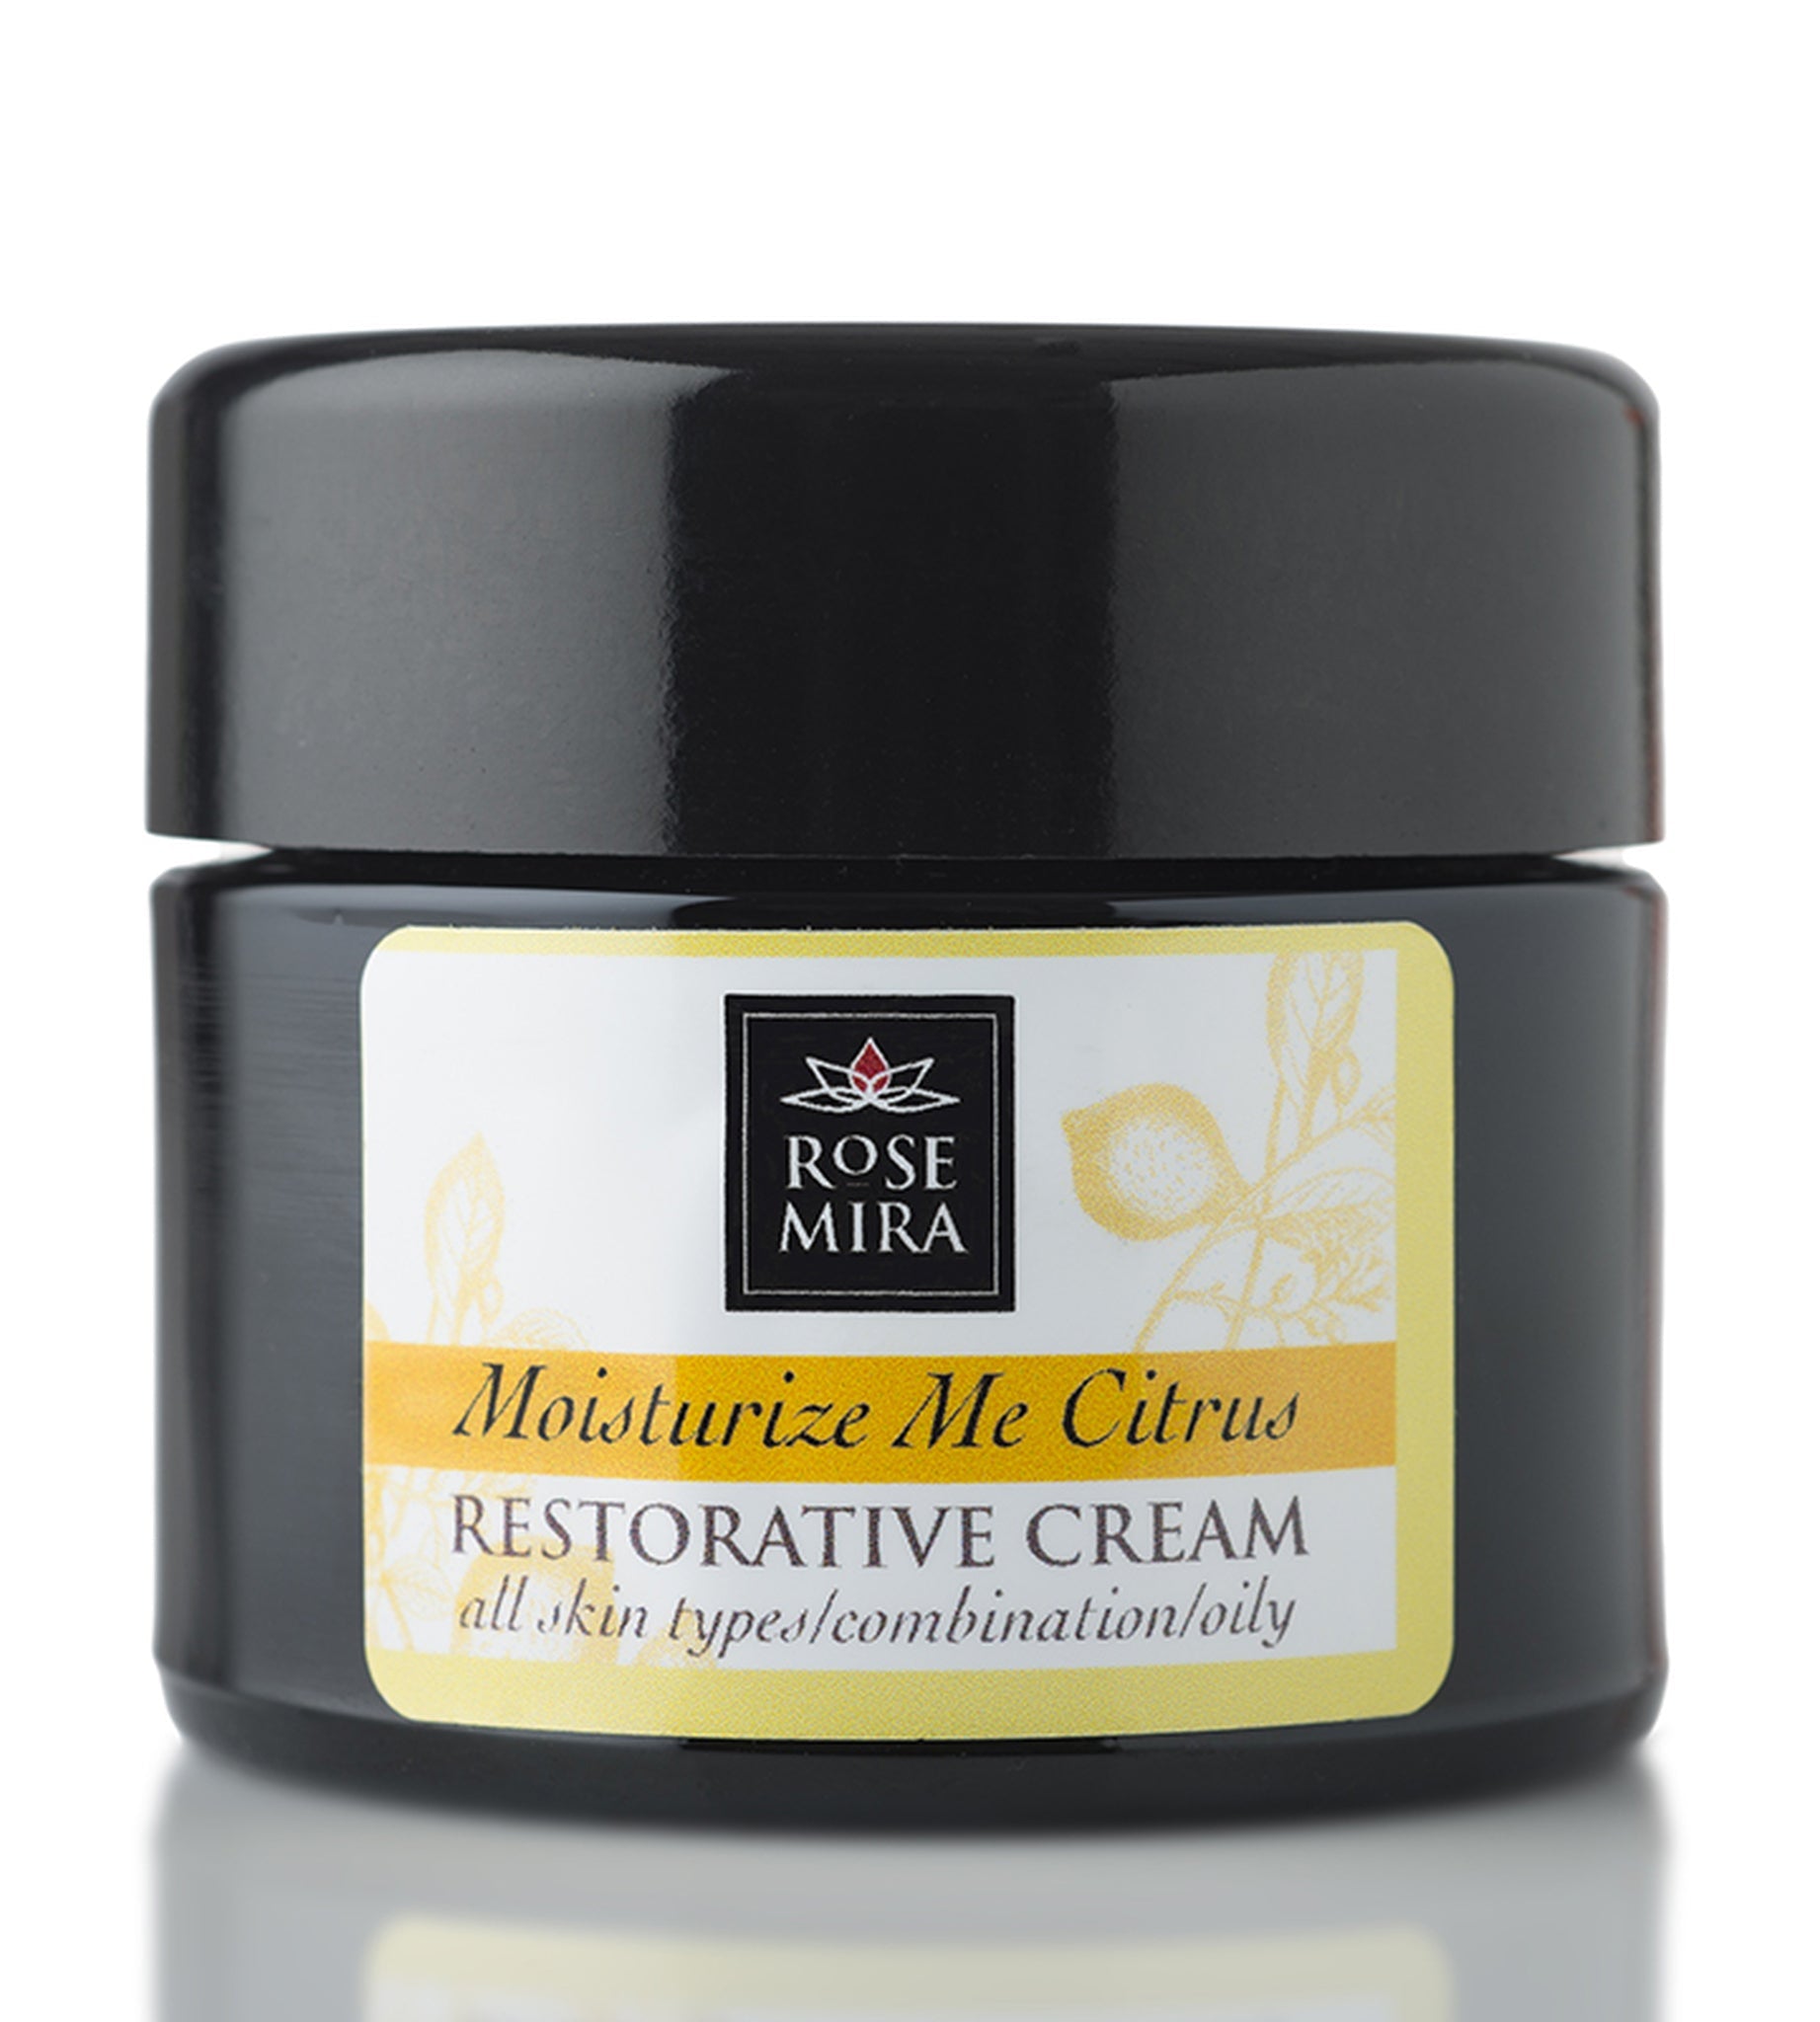 Moisturize Me Citrus Restorative Cream (Day/Night) - Guy Christopher